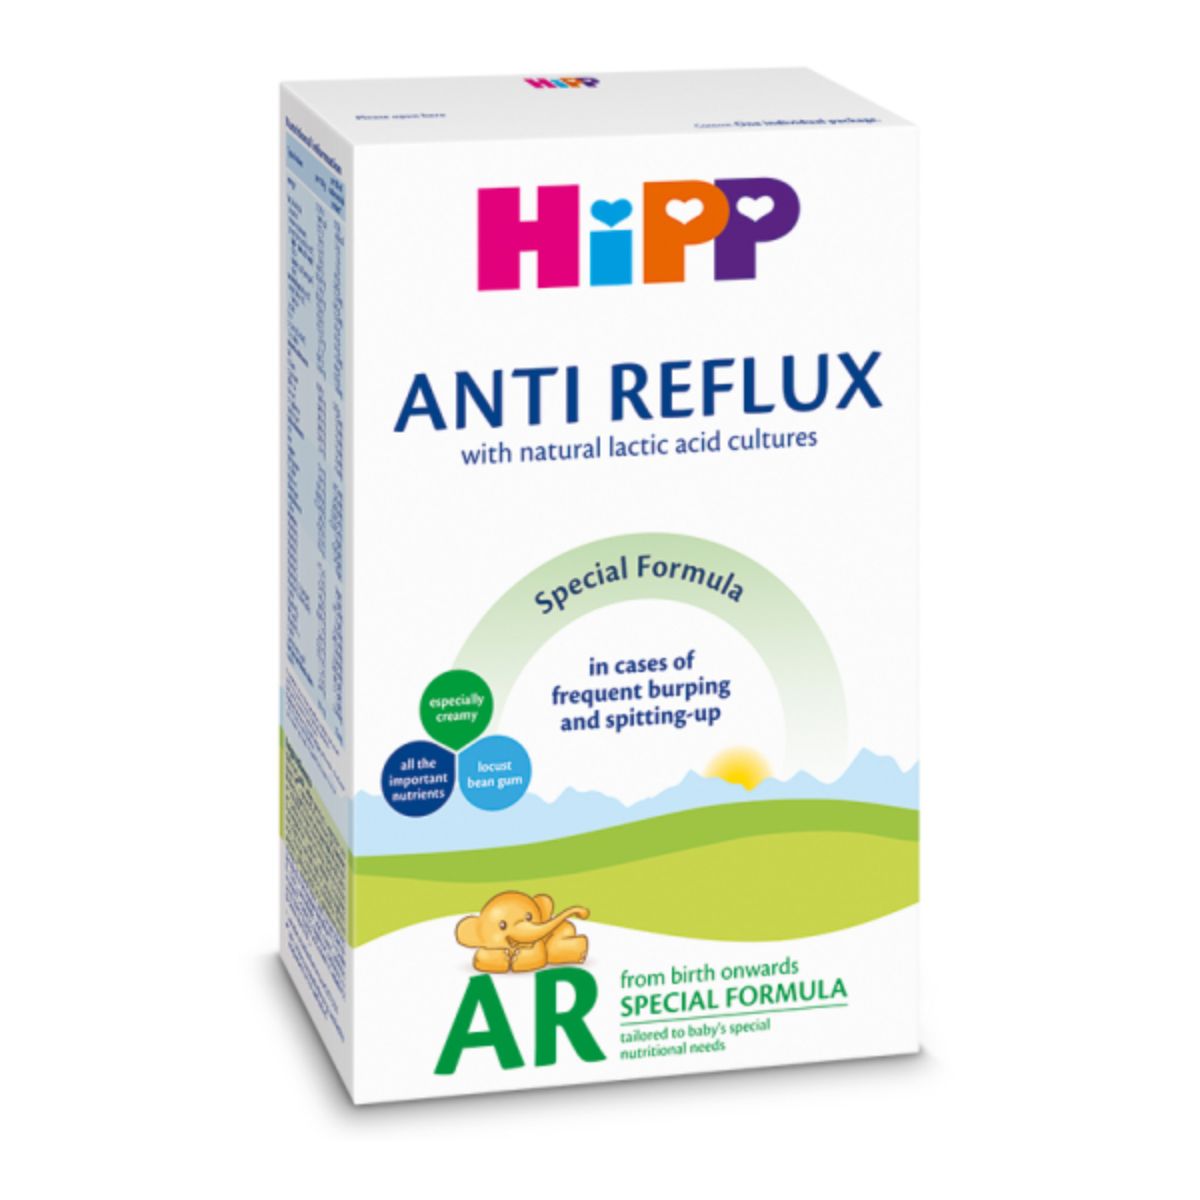 Lapte praf anti-reflux formula speciala Hipp, 300 g